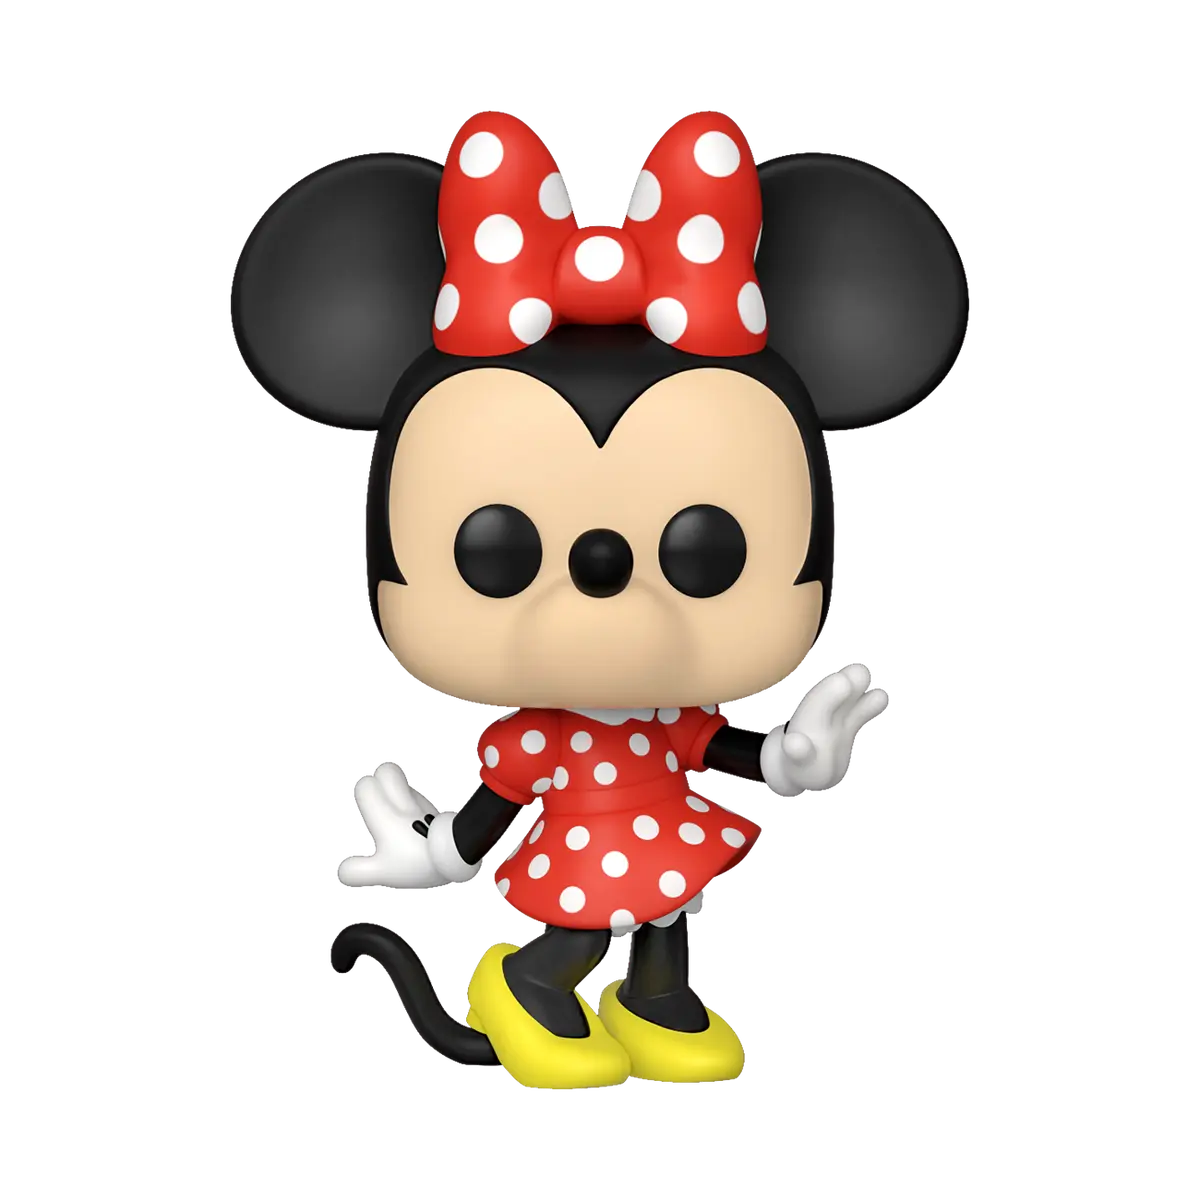 Funko POP! - Disney Classics - Minnie Mouse #1188